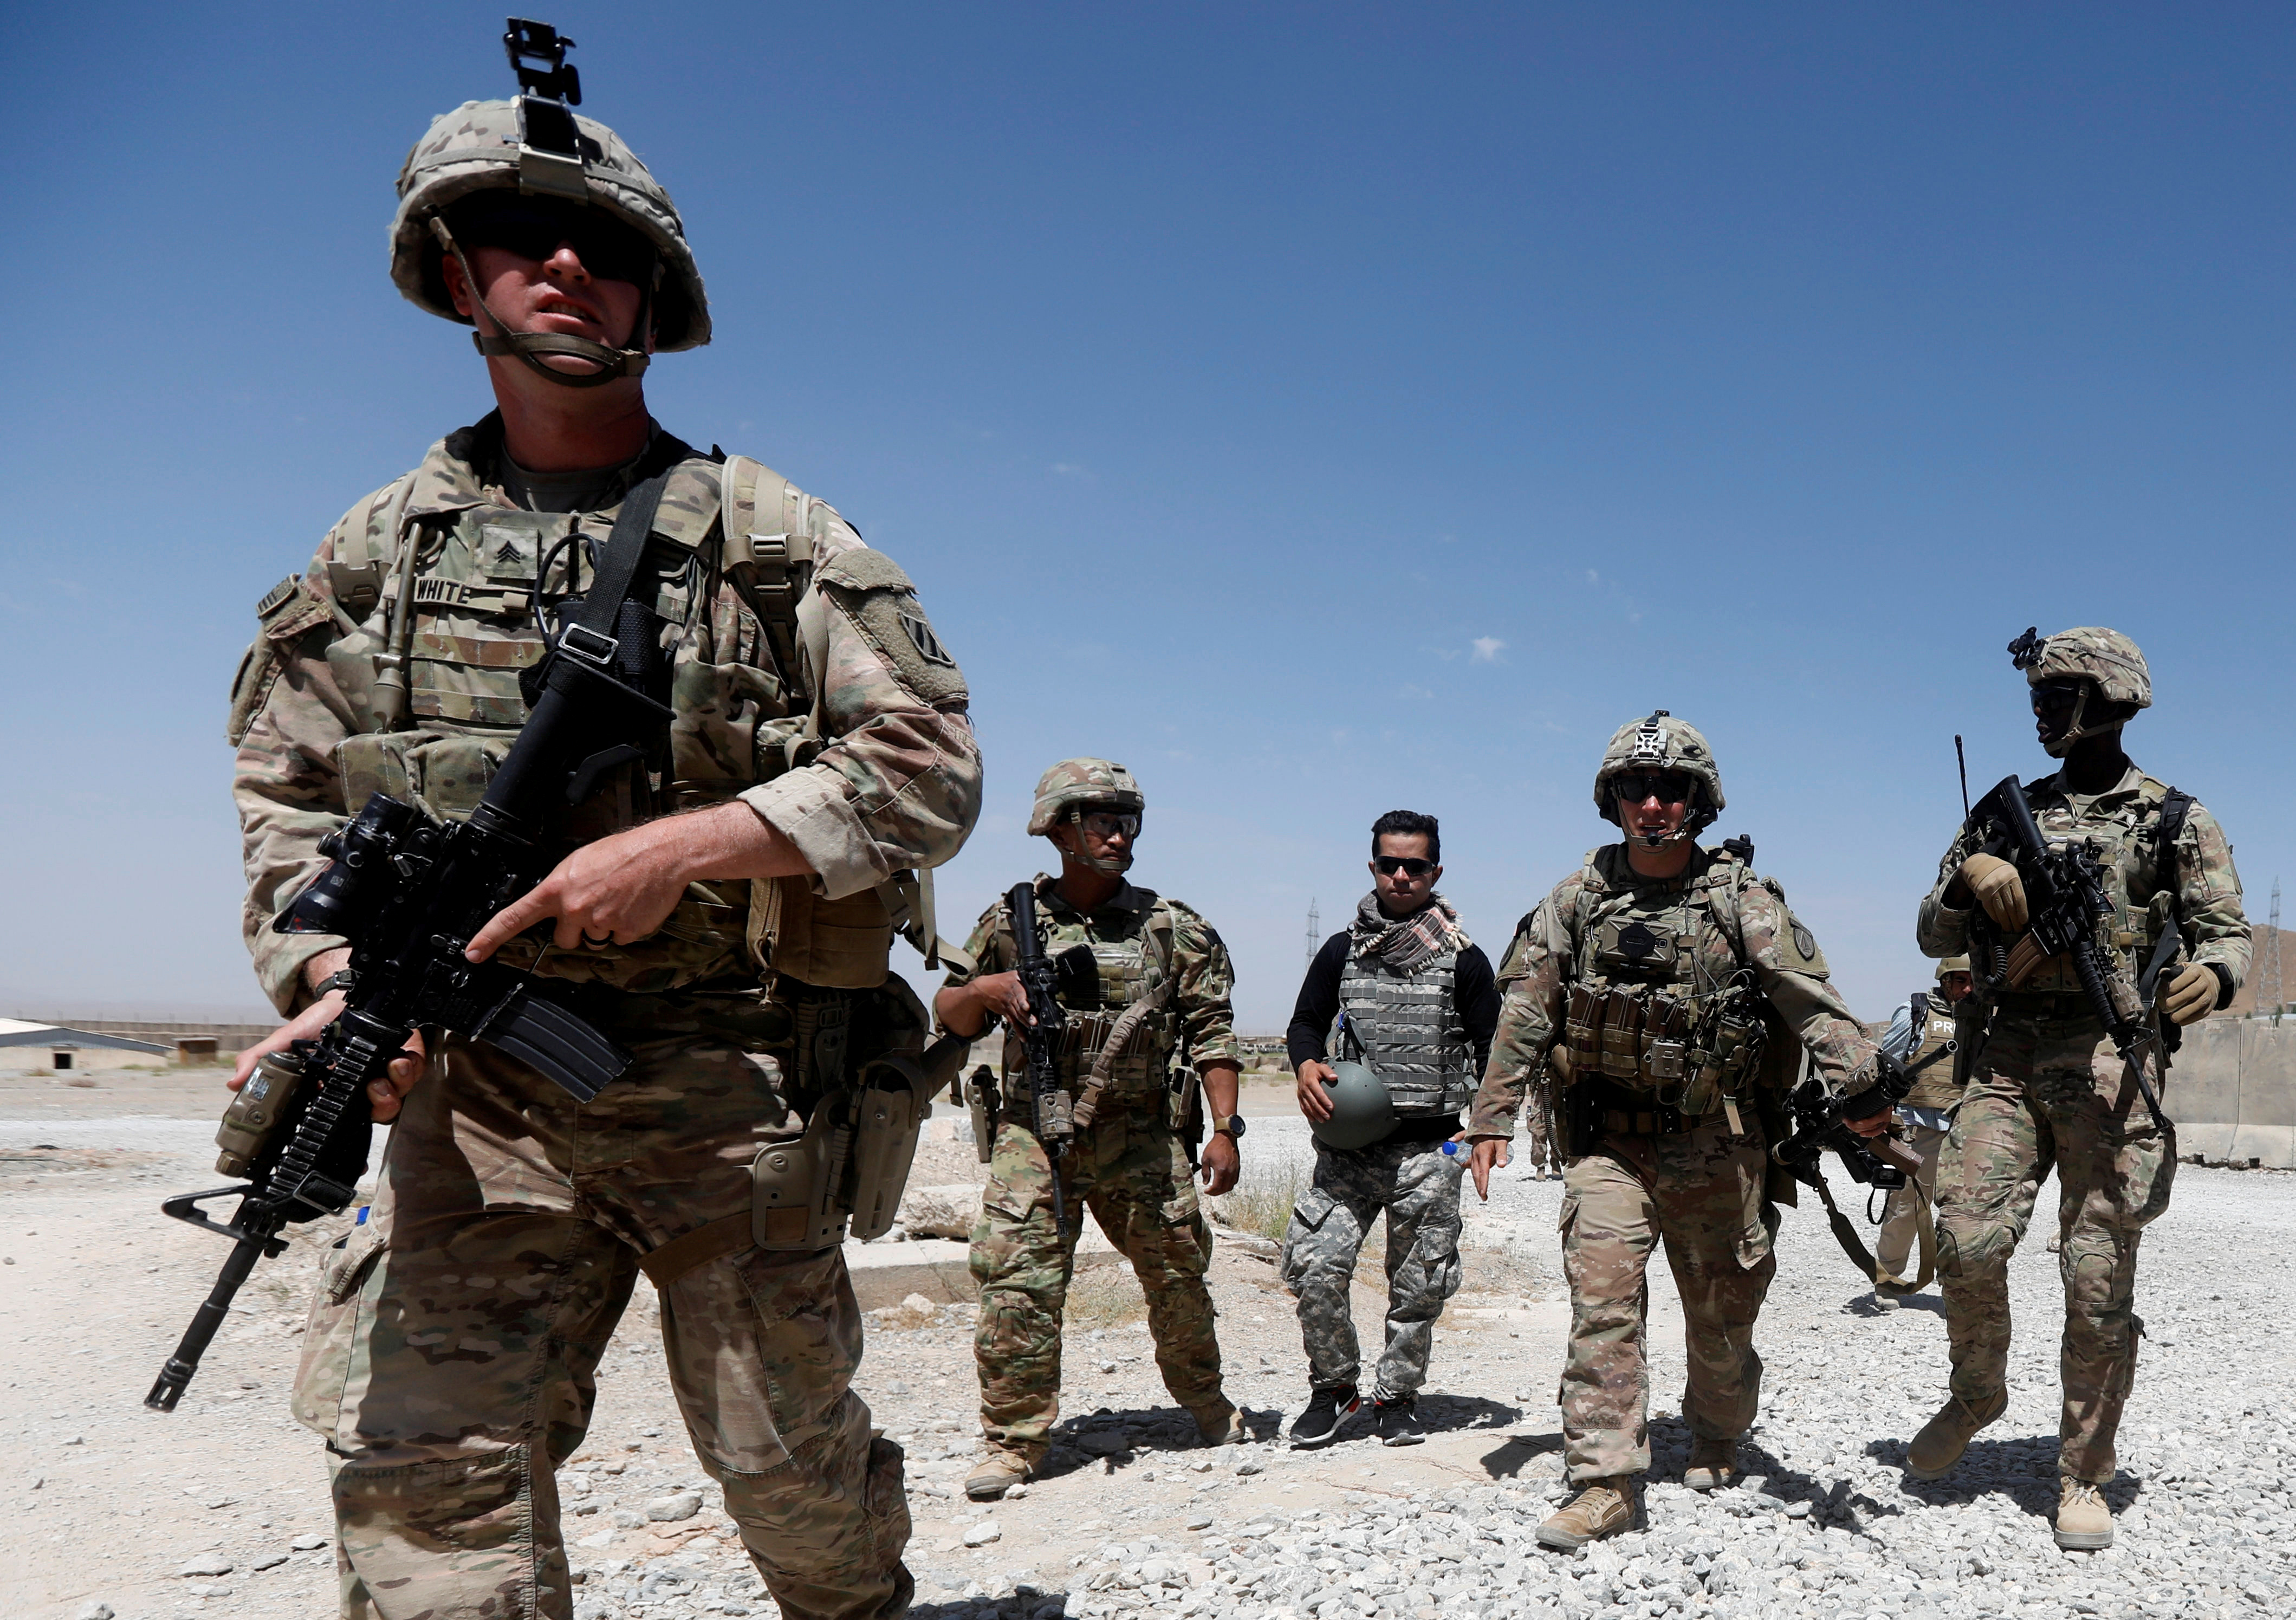 Нато в ираке. Американские войска в Афганистане. Войска США В Афганистане 2001. Американские военные в Афганистане. Американские солдаты в Афганистане.